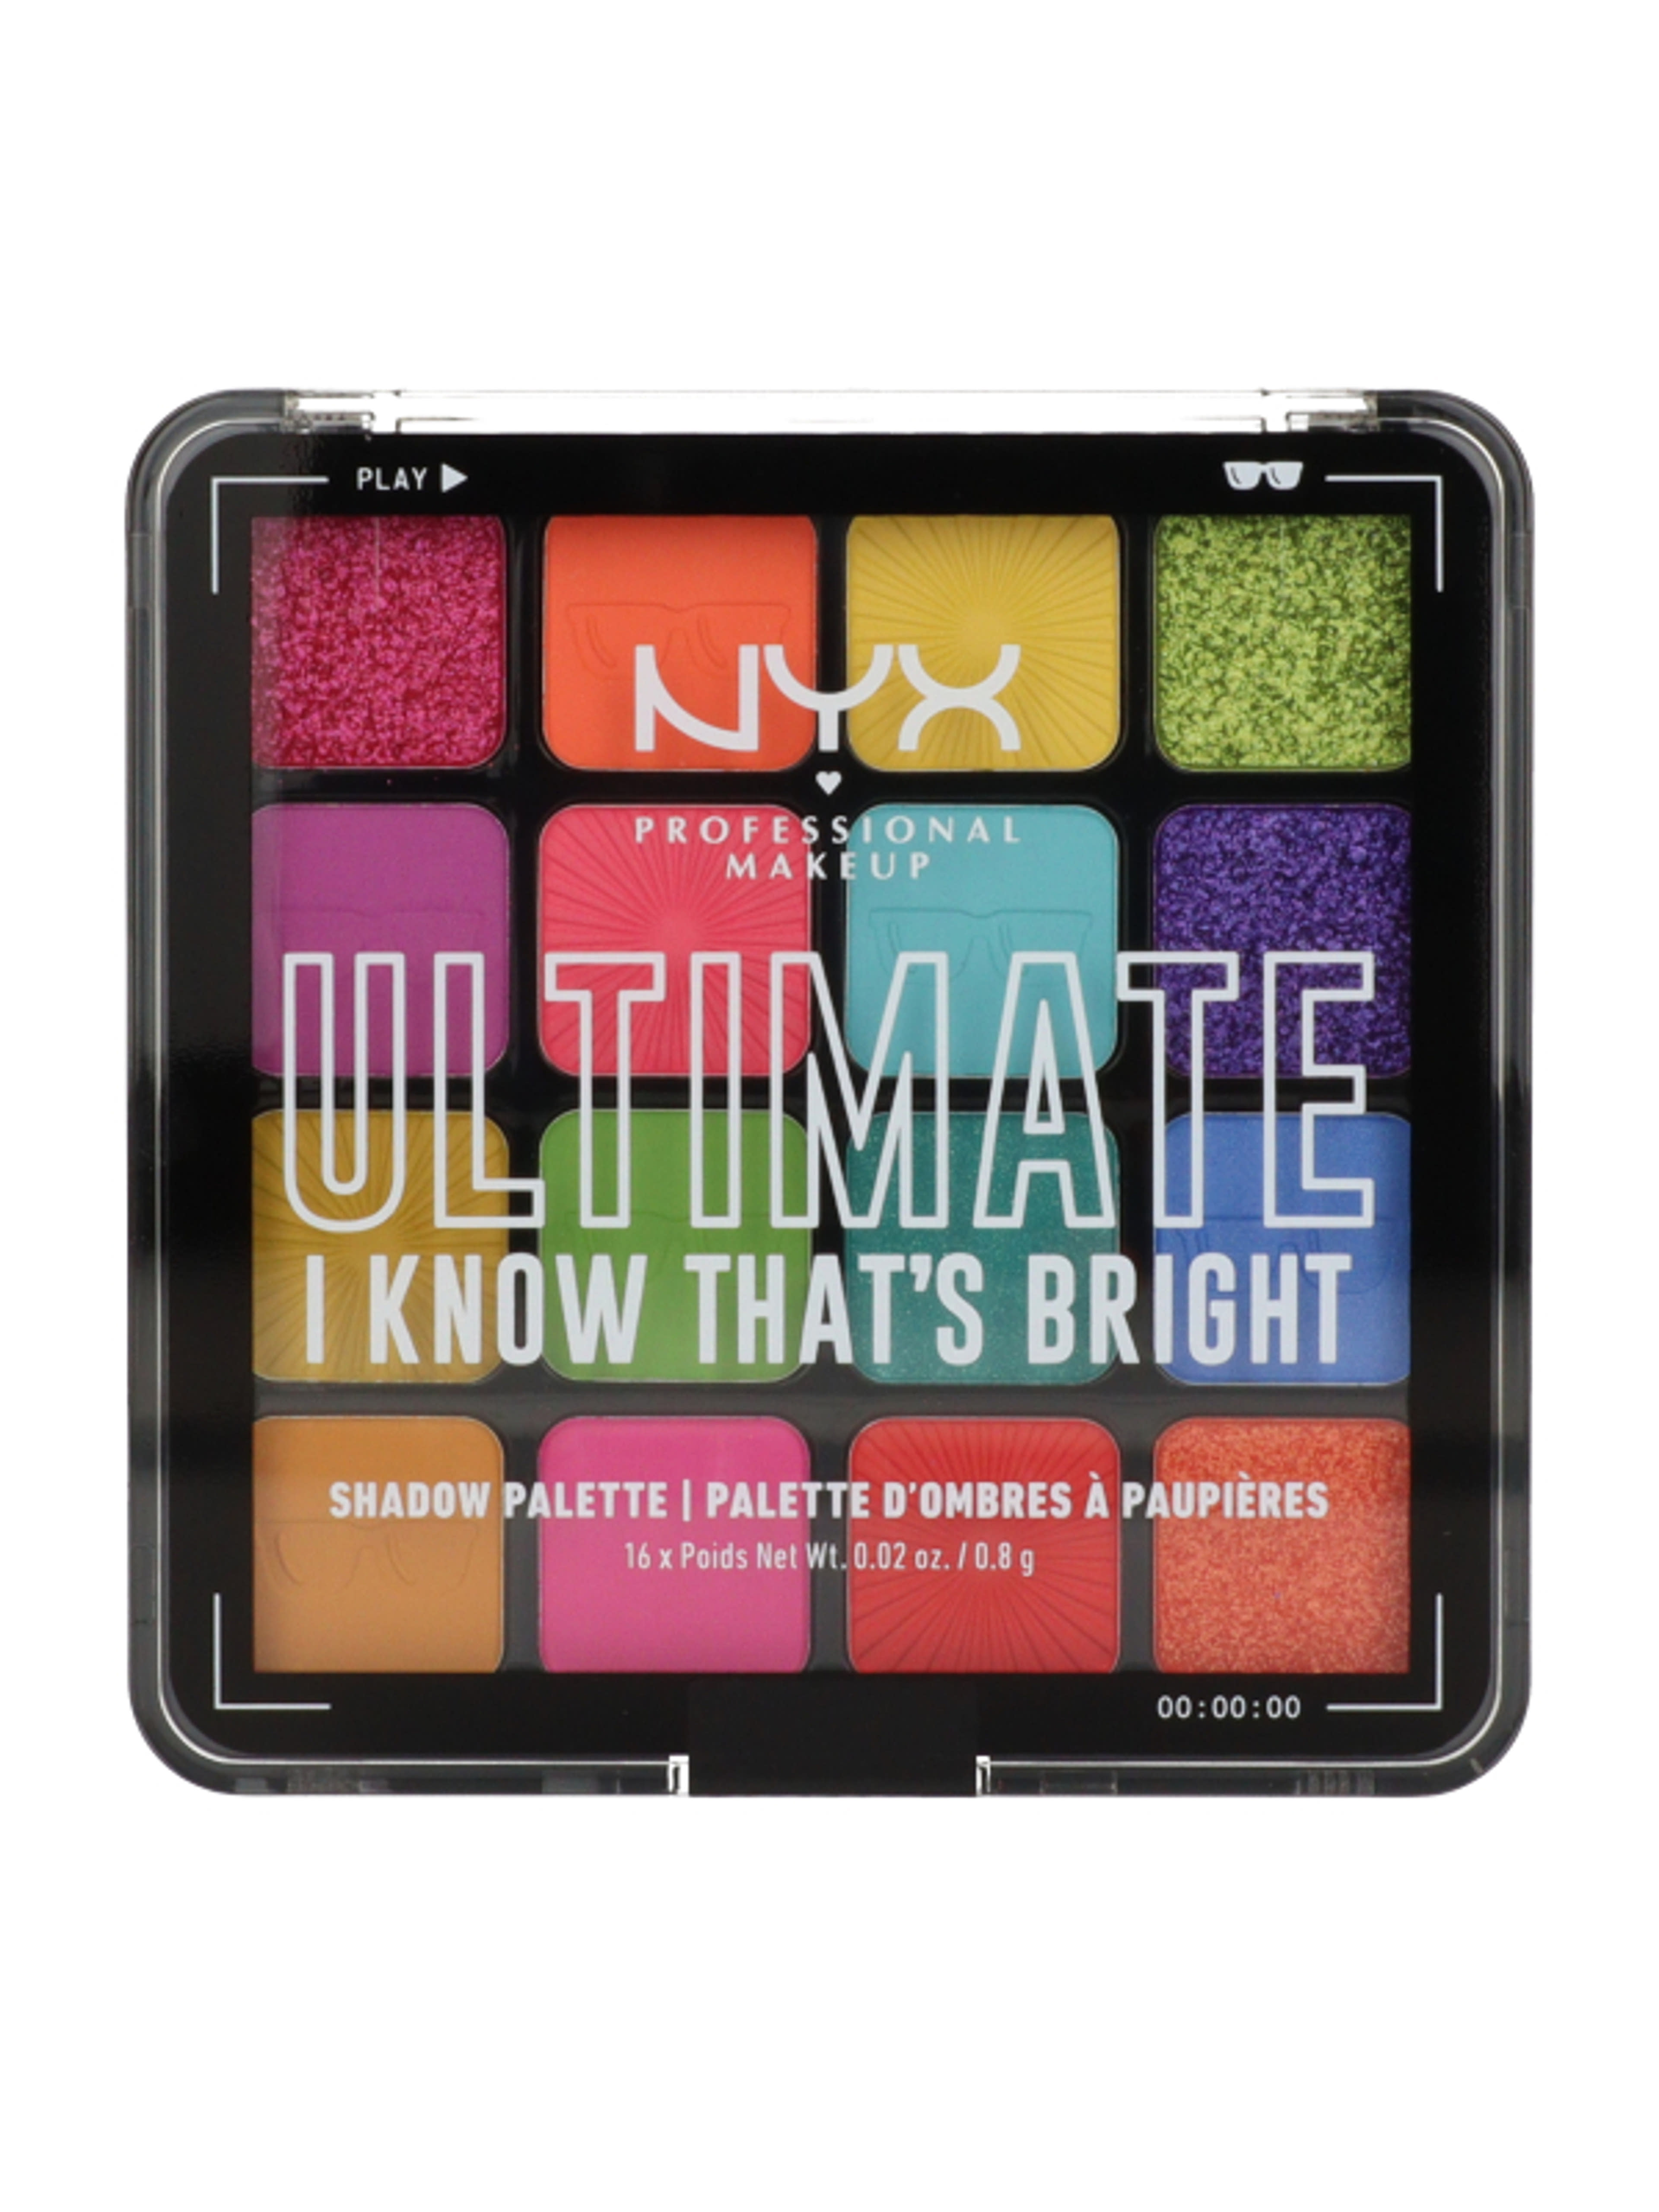 NYX Professional Makeup Ultimate szemhéjpúder paletta /i know thats bright - 1 db